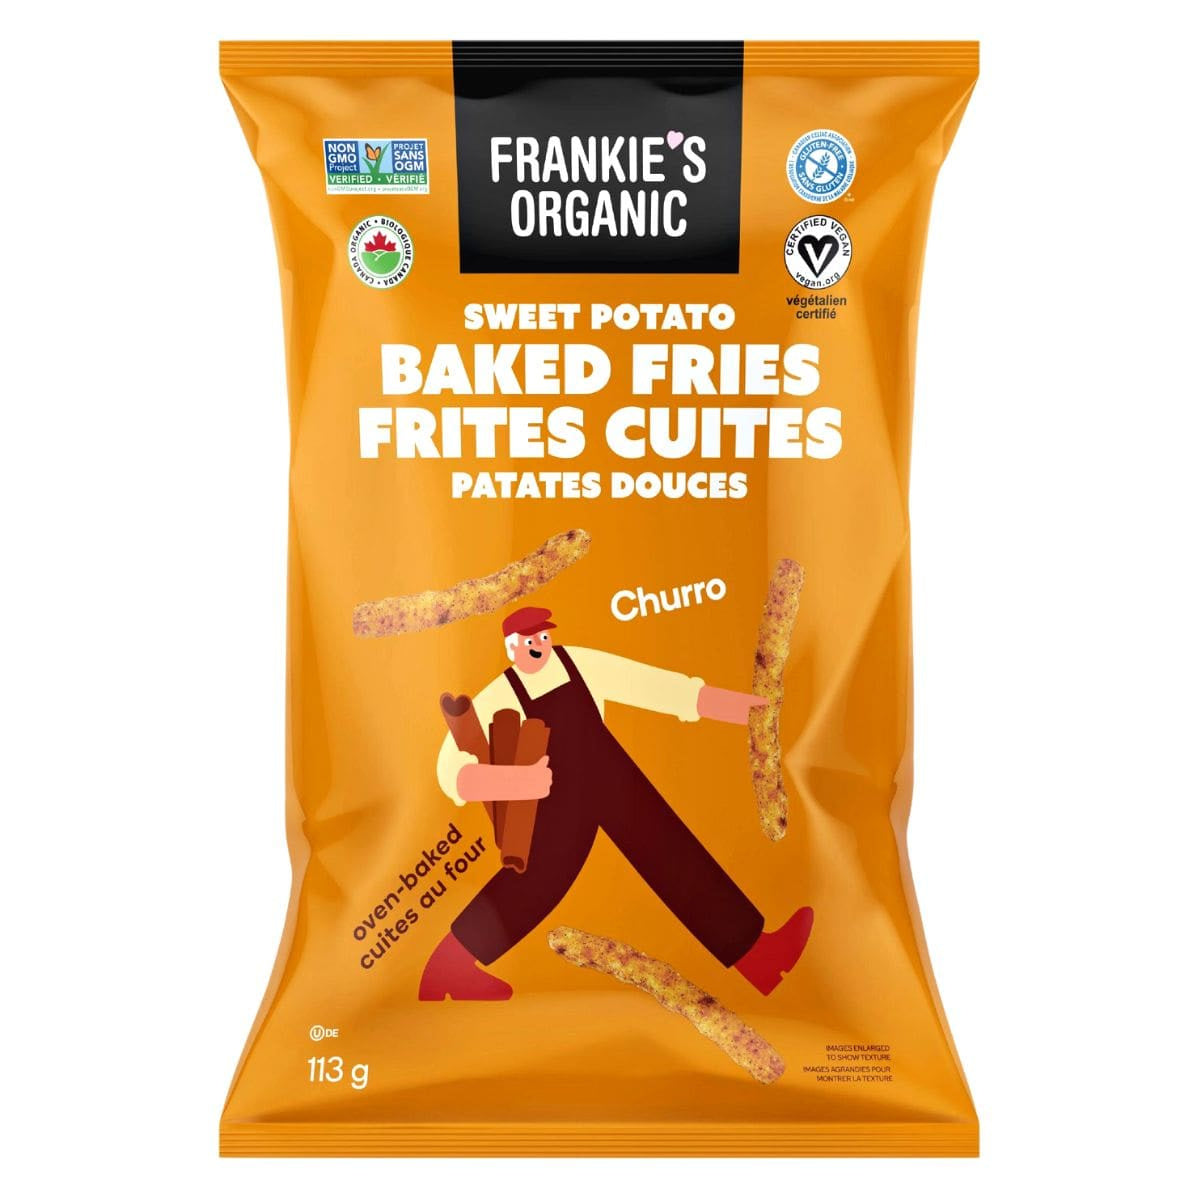 Orange package of Frankie's Organic Sweet Potato Churro Baked Fries.